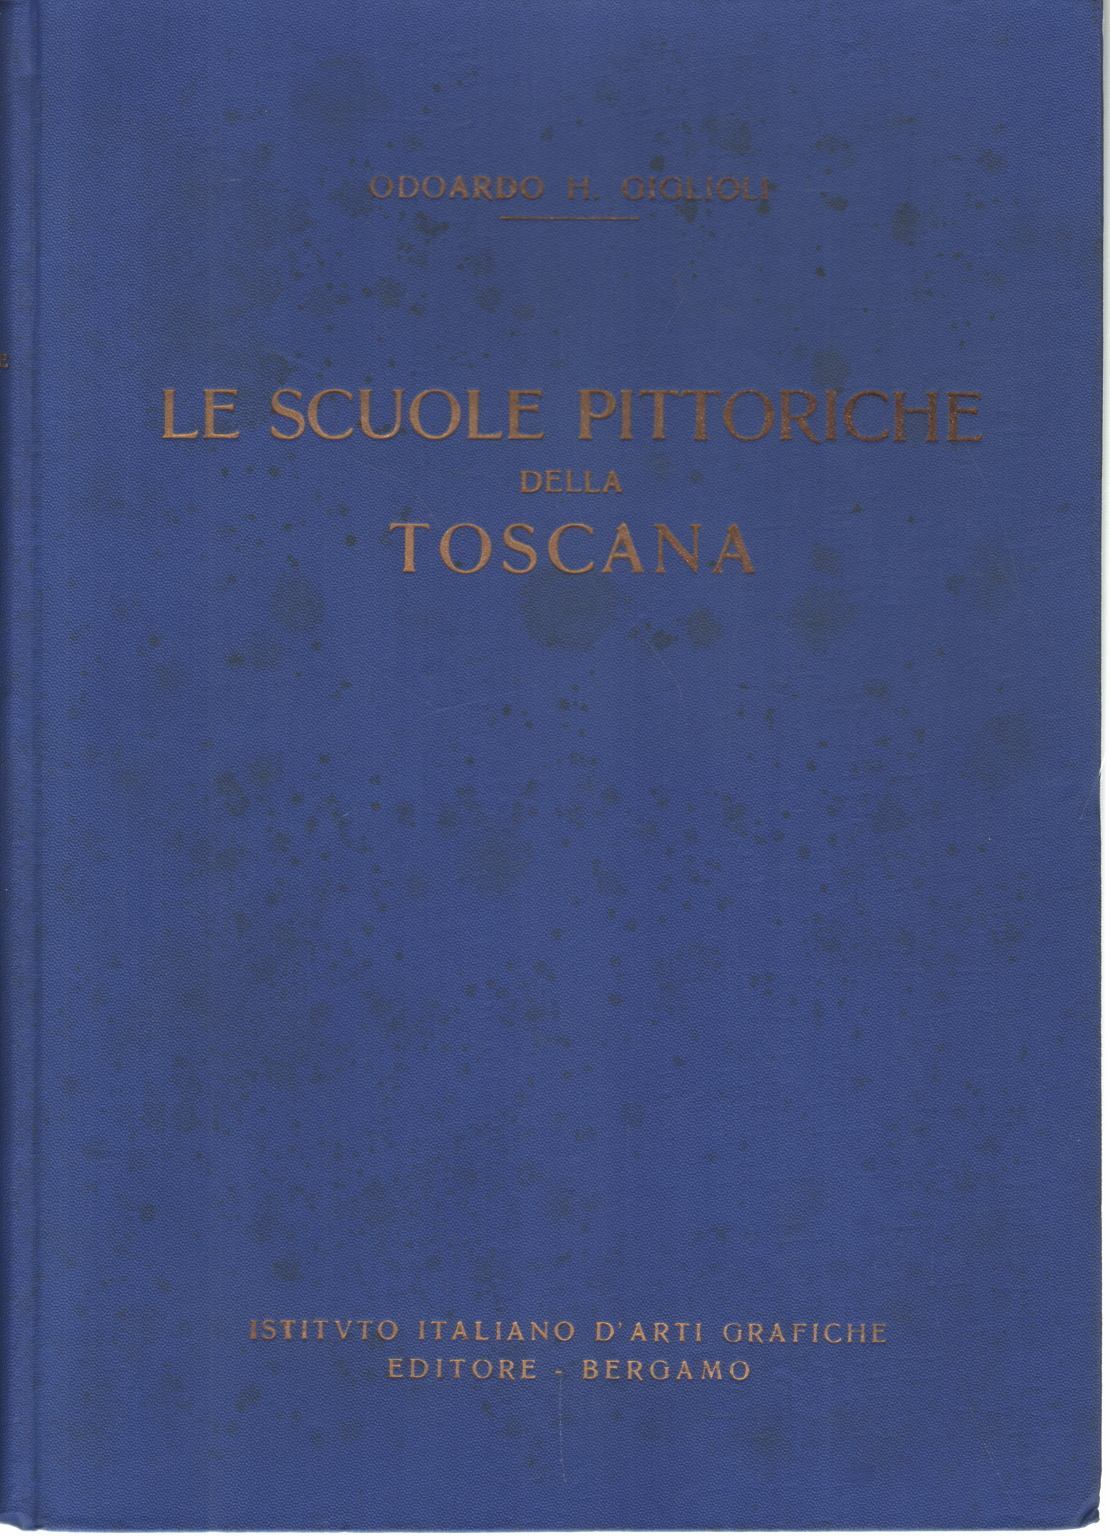 Les écoles de la Toscane (Sec. XIV - XV), Odoardo H. Giglioli